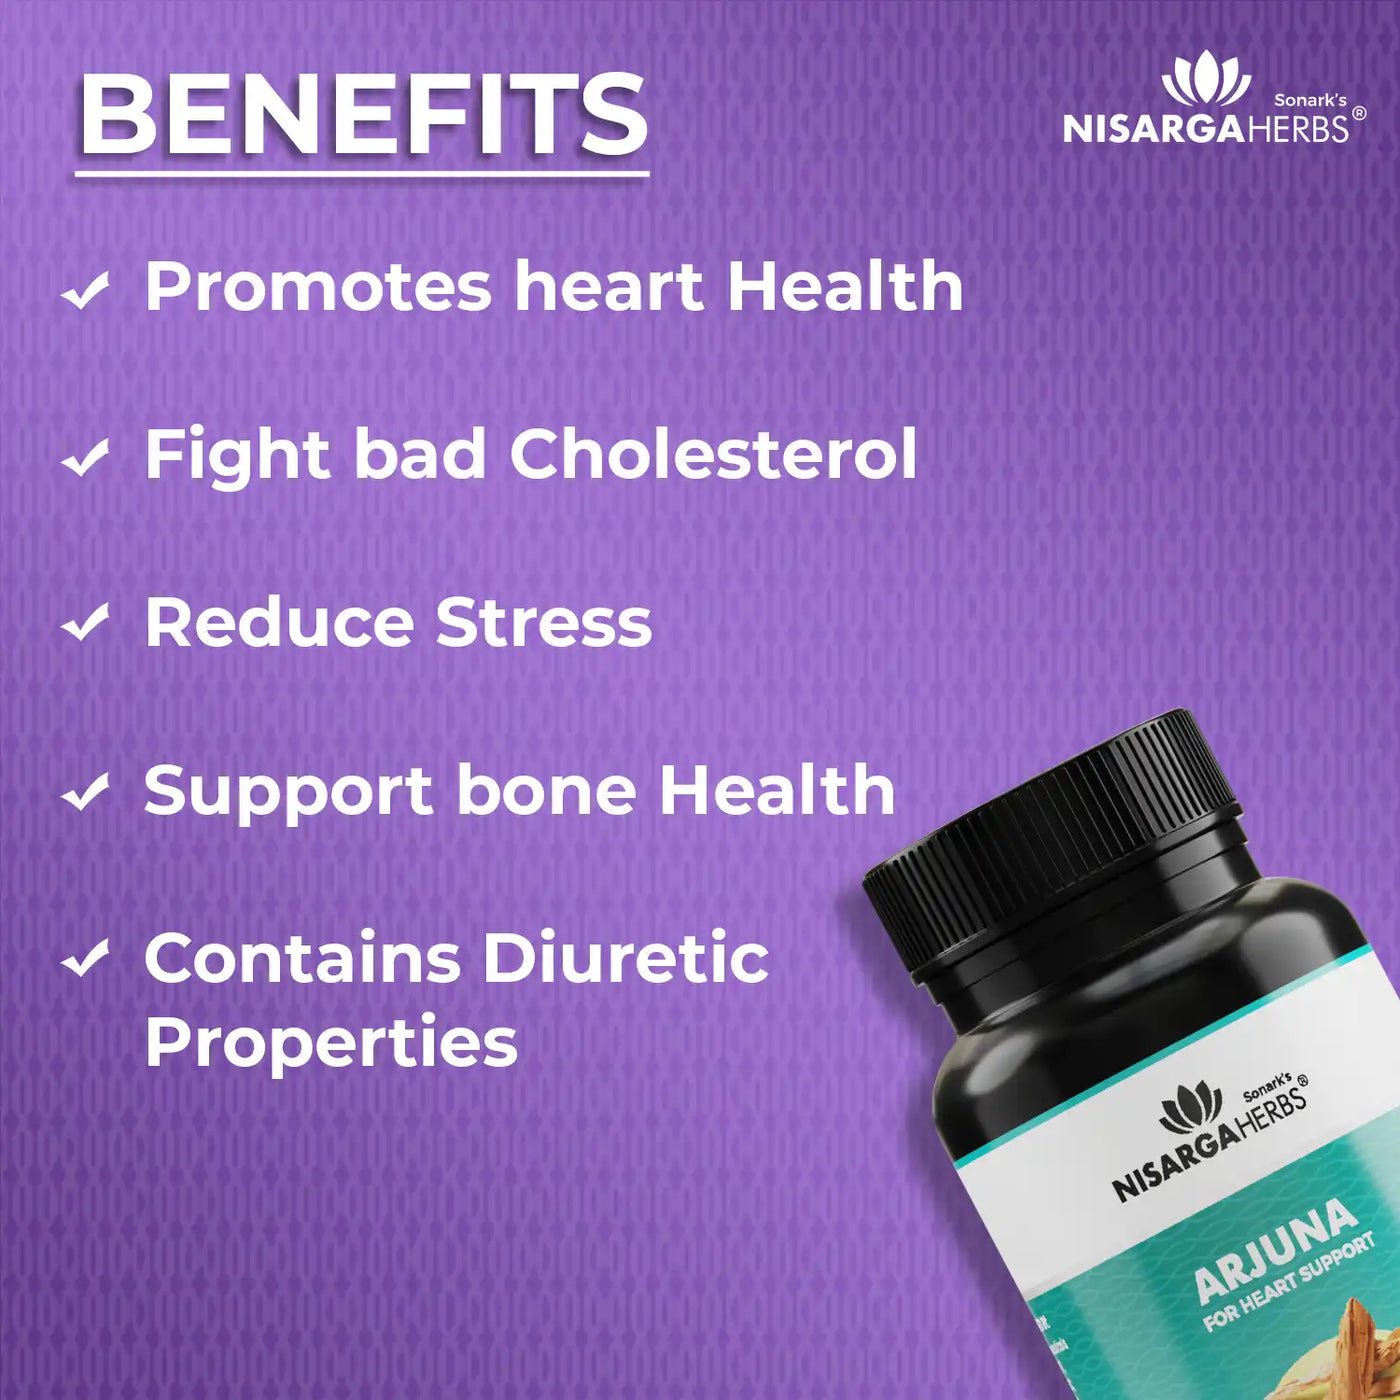 ayurvedic medicine arjuna tablet for promoting heart health, reduce cholesterol, reduce stress, improve bone health and natural diuretic